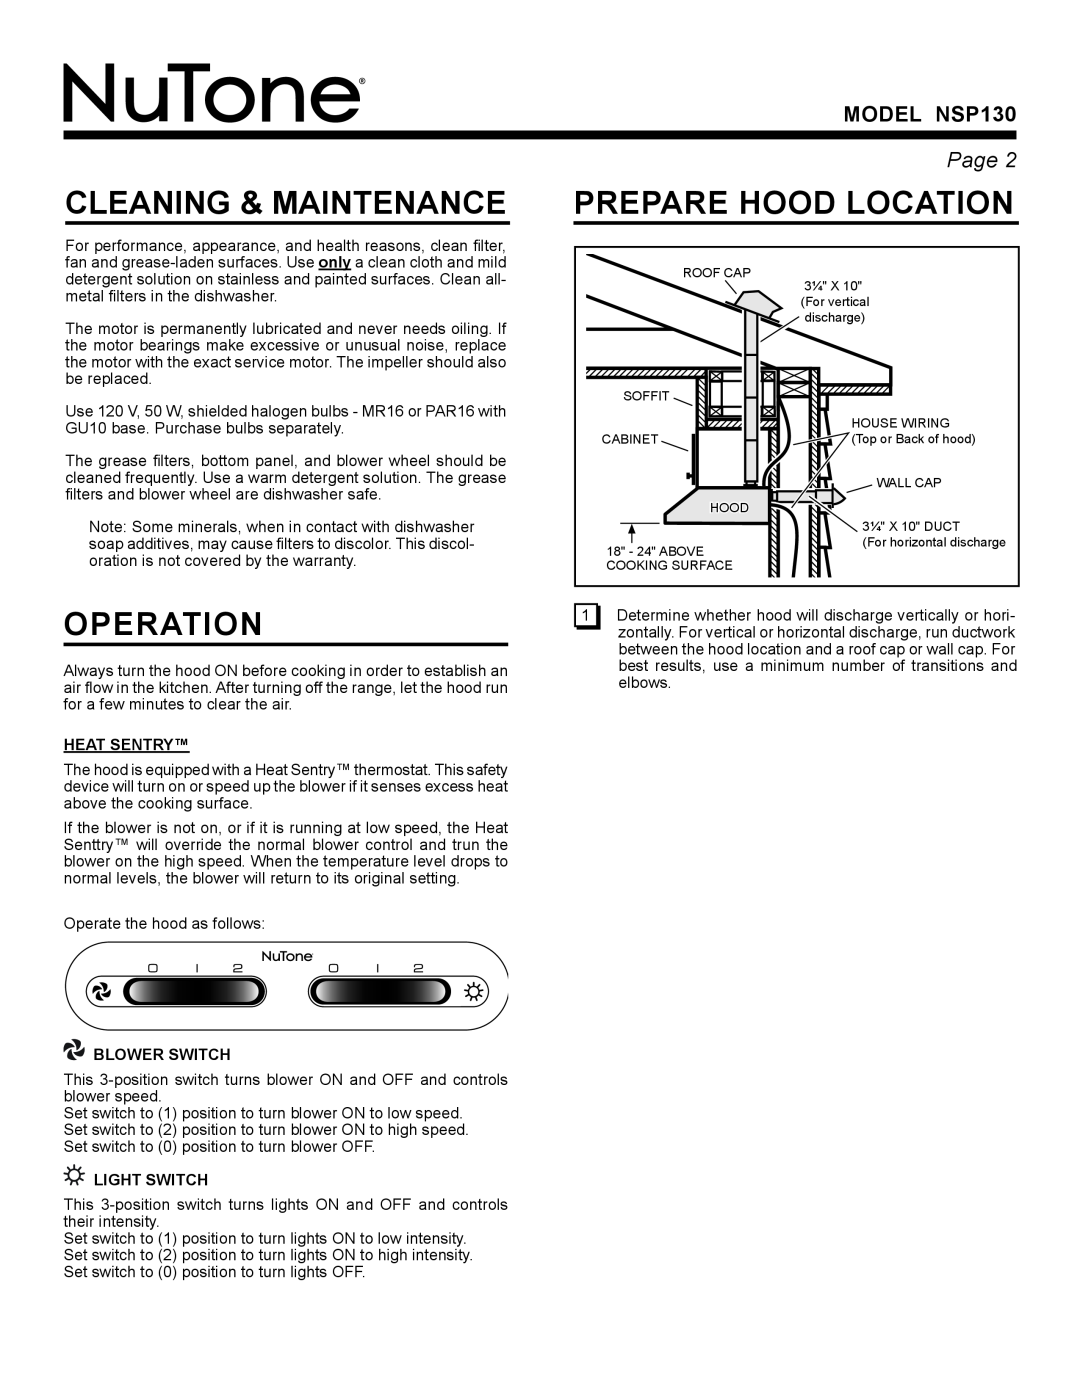 NuTone NSP130 warranty cleaning & Maintenance, prepare hood location, operation, model nsp130, Page  